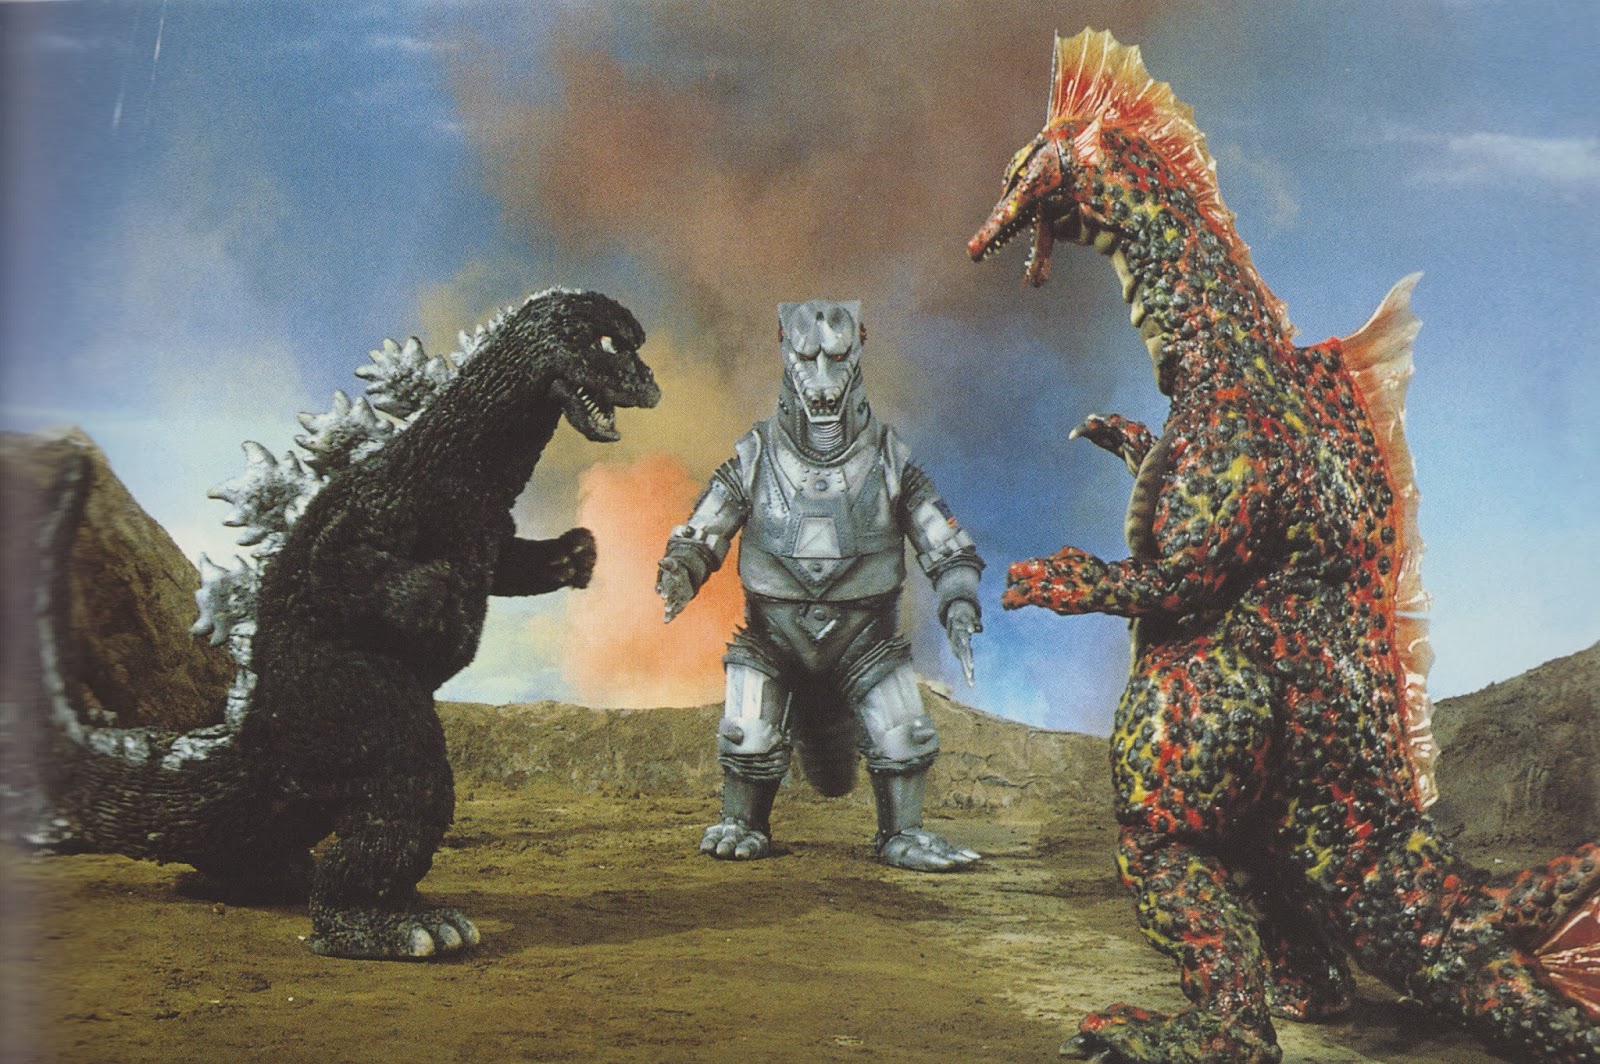 Godzilla Vs. Mechagodzilla Pics, Movie Collection